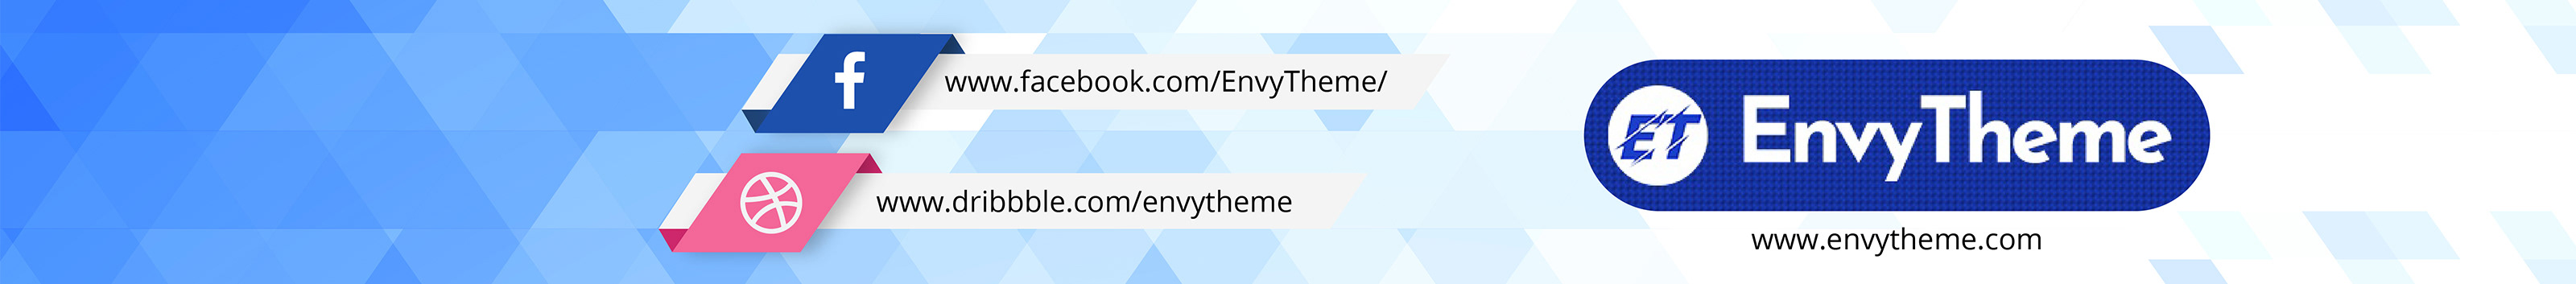 EnvyTheme .com's profile banner